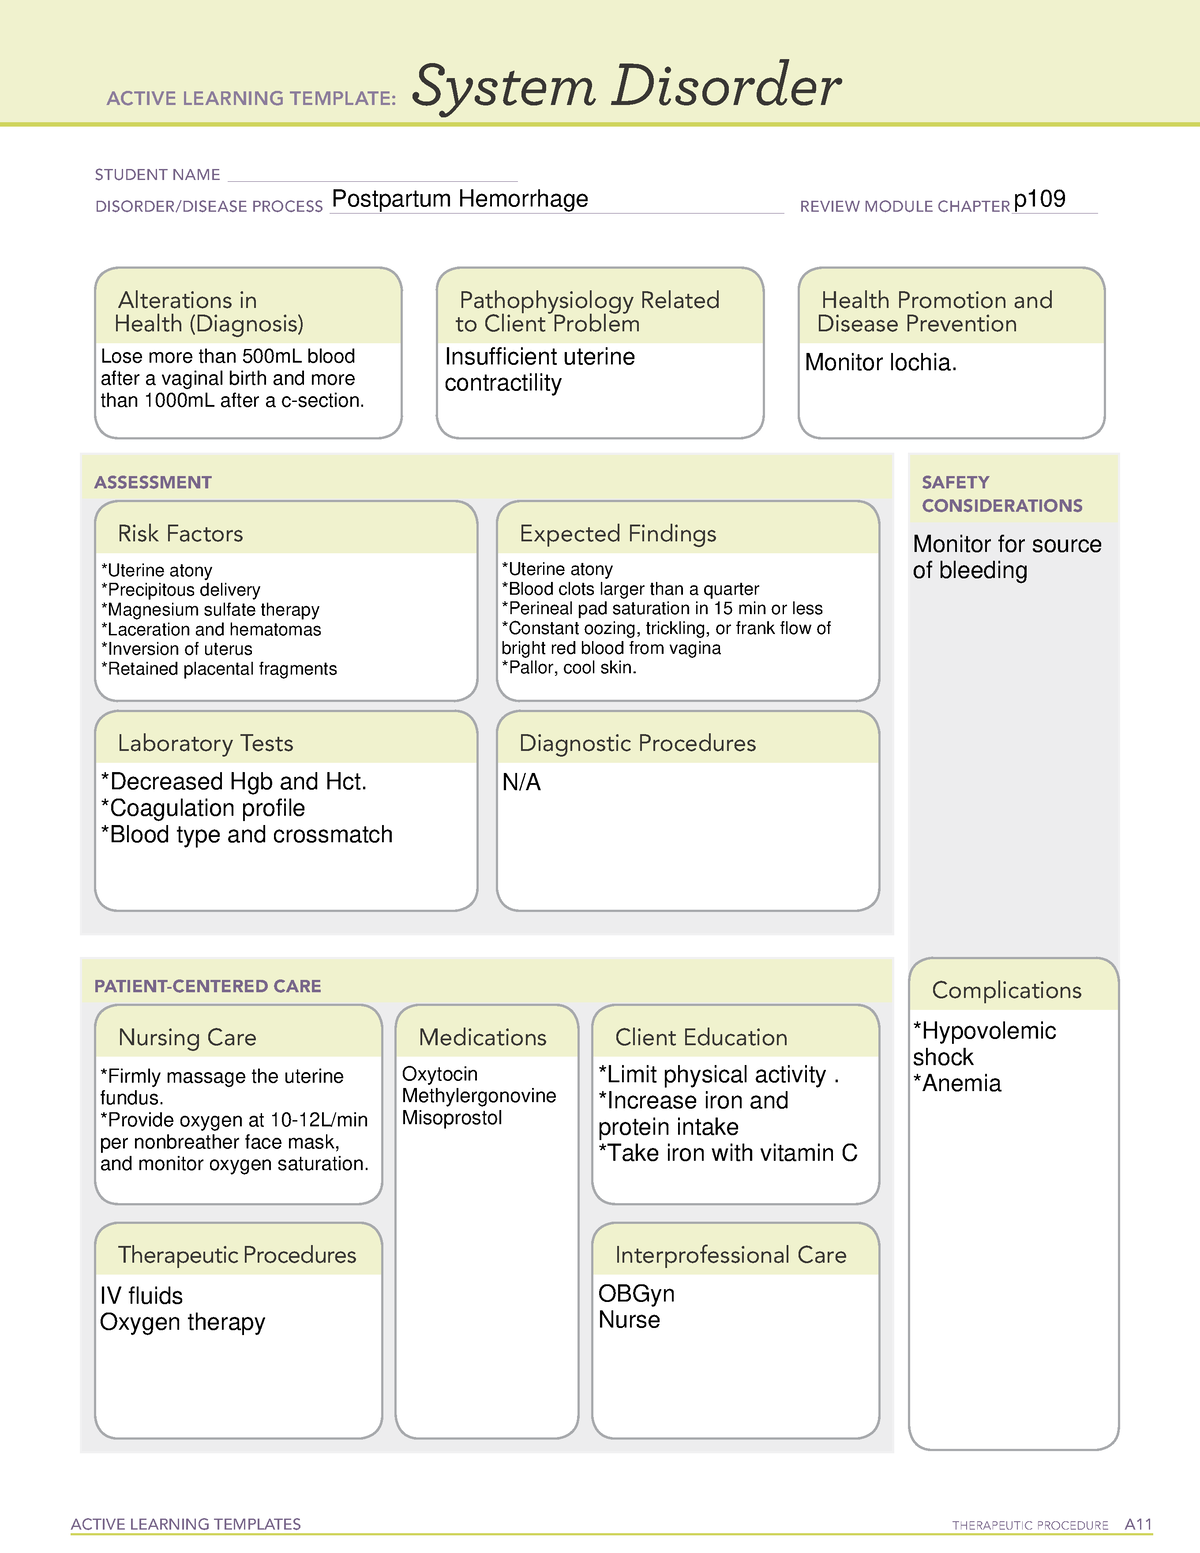 ati-template-postpartum-hemorrhage-active-learning-templates